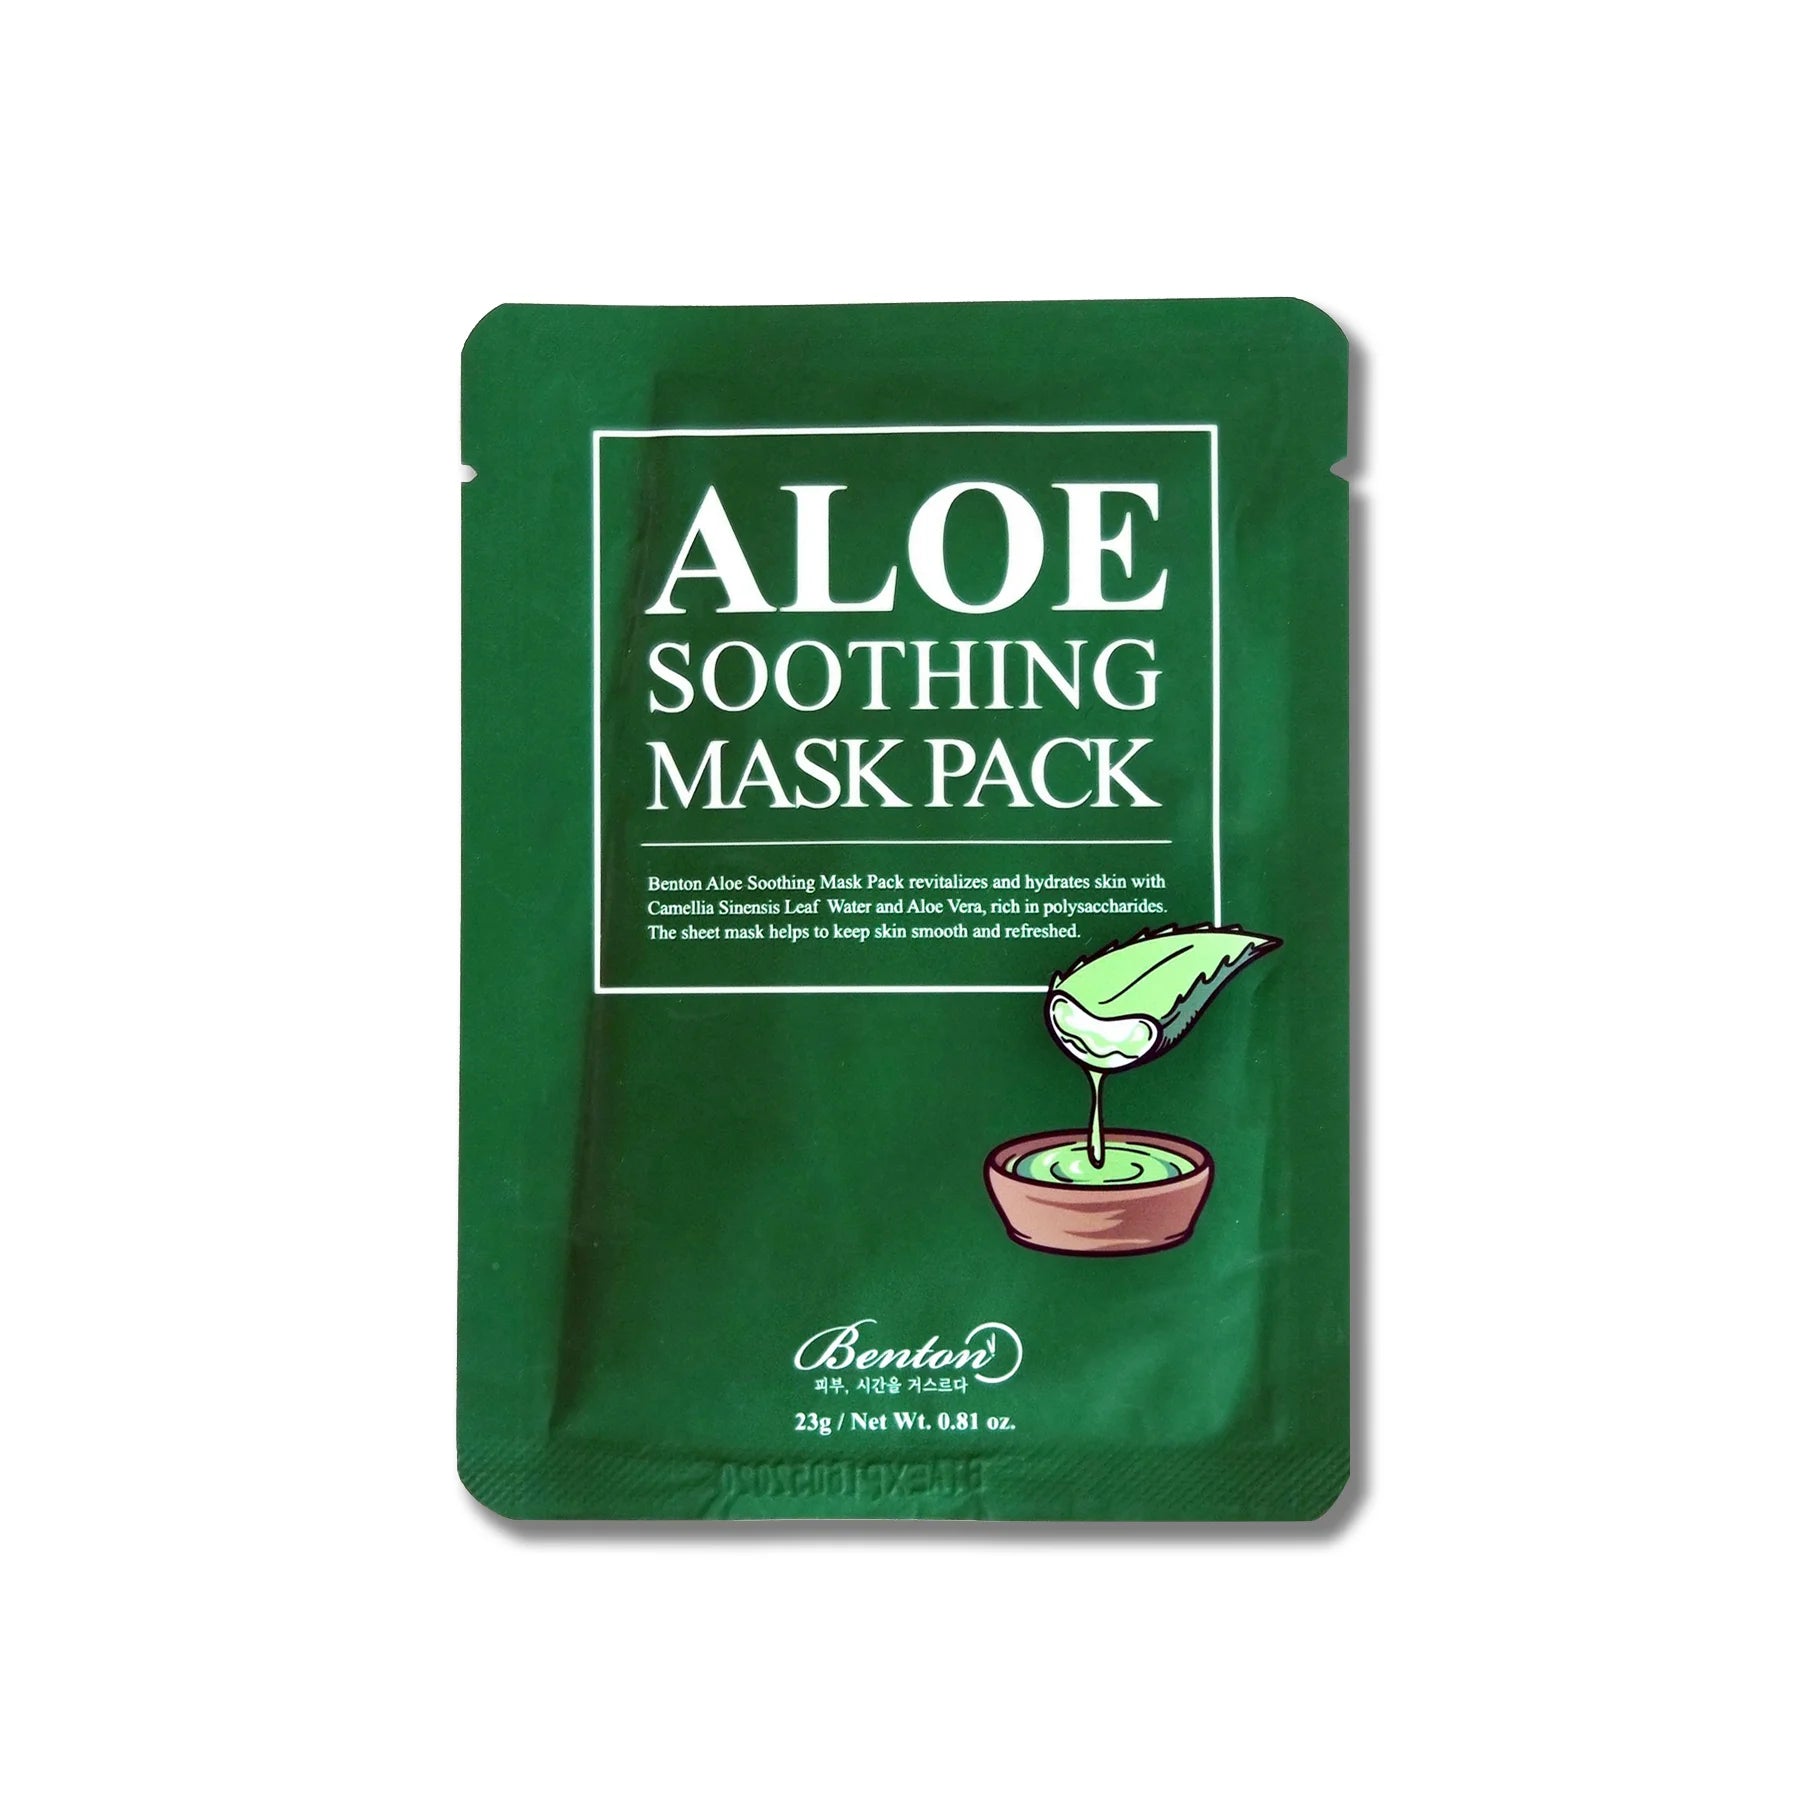 Benton Aloe Soothing Mask Pack Best gift shopping from South Korea Japan face mask for men women quick easy home self-care for skincare lovers K Beauty World